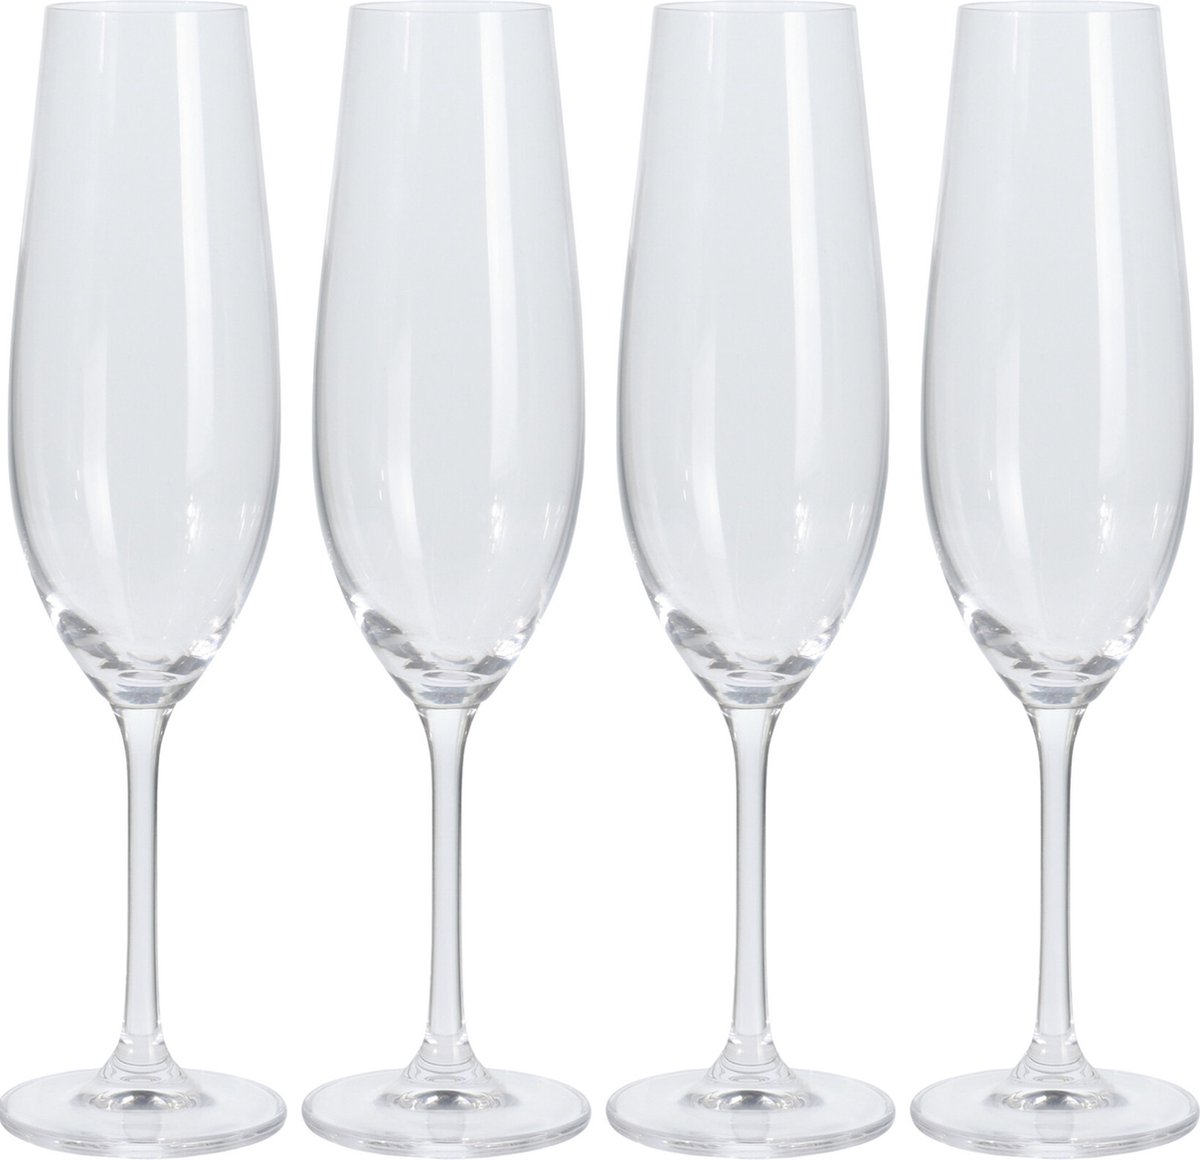 Atmos Fera Kristal champagneglas 260ml 4 stuks